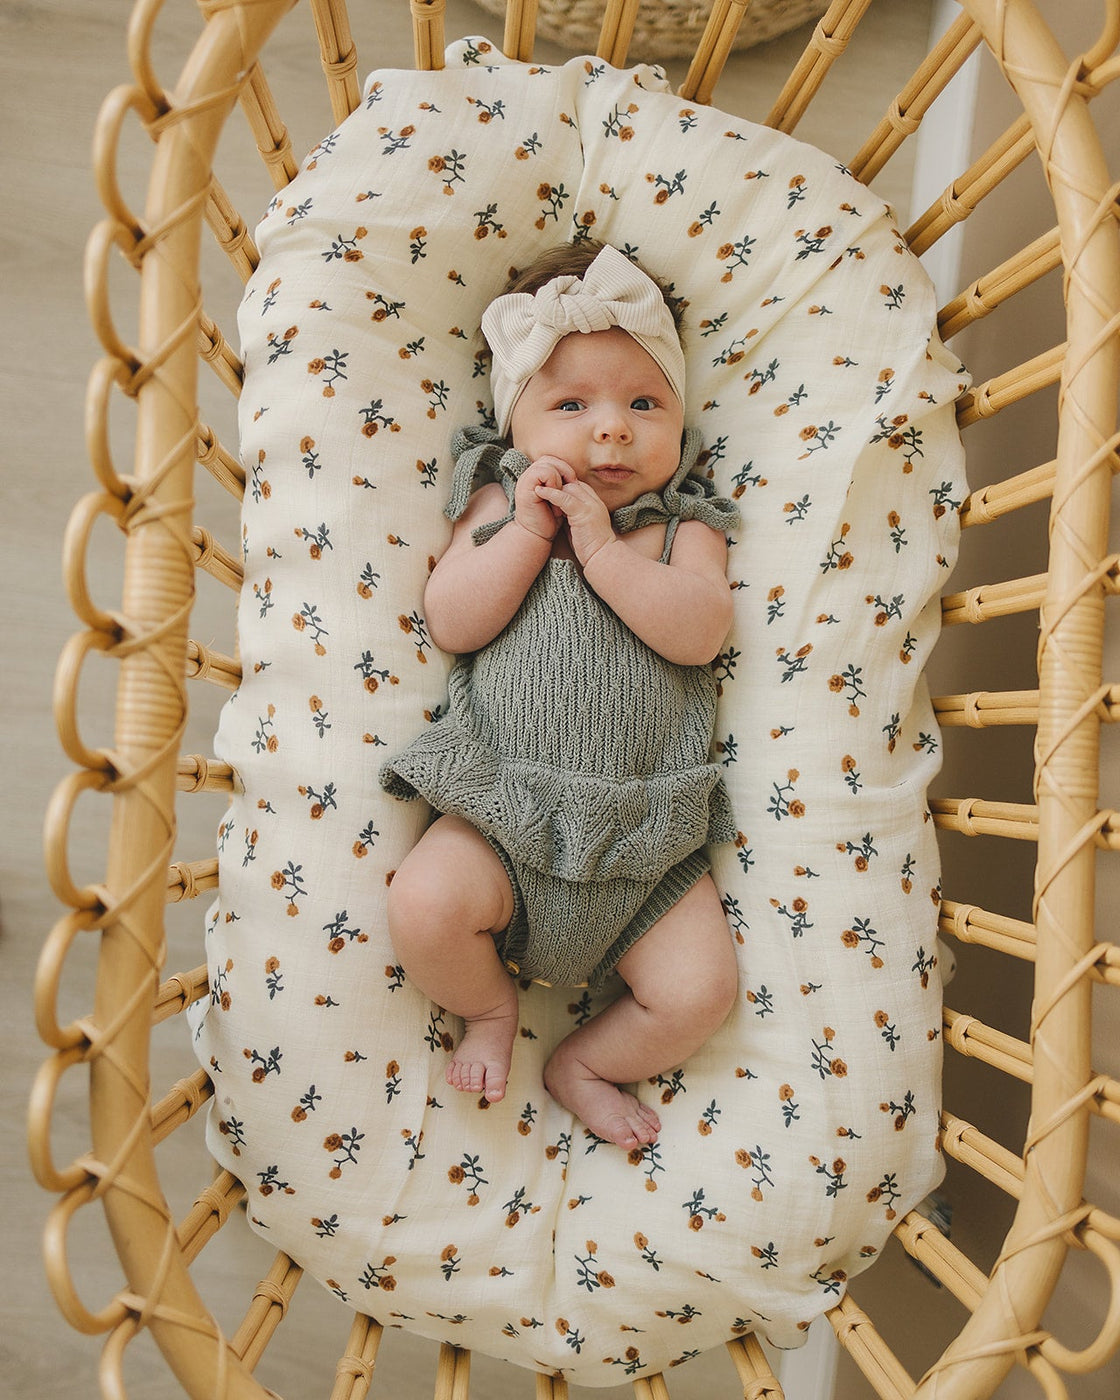 a baby lying in a crib